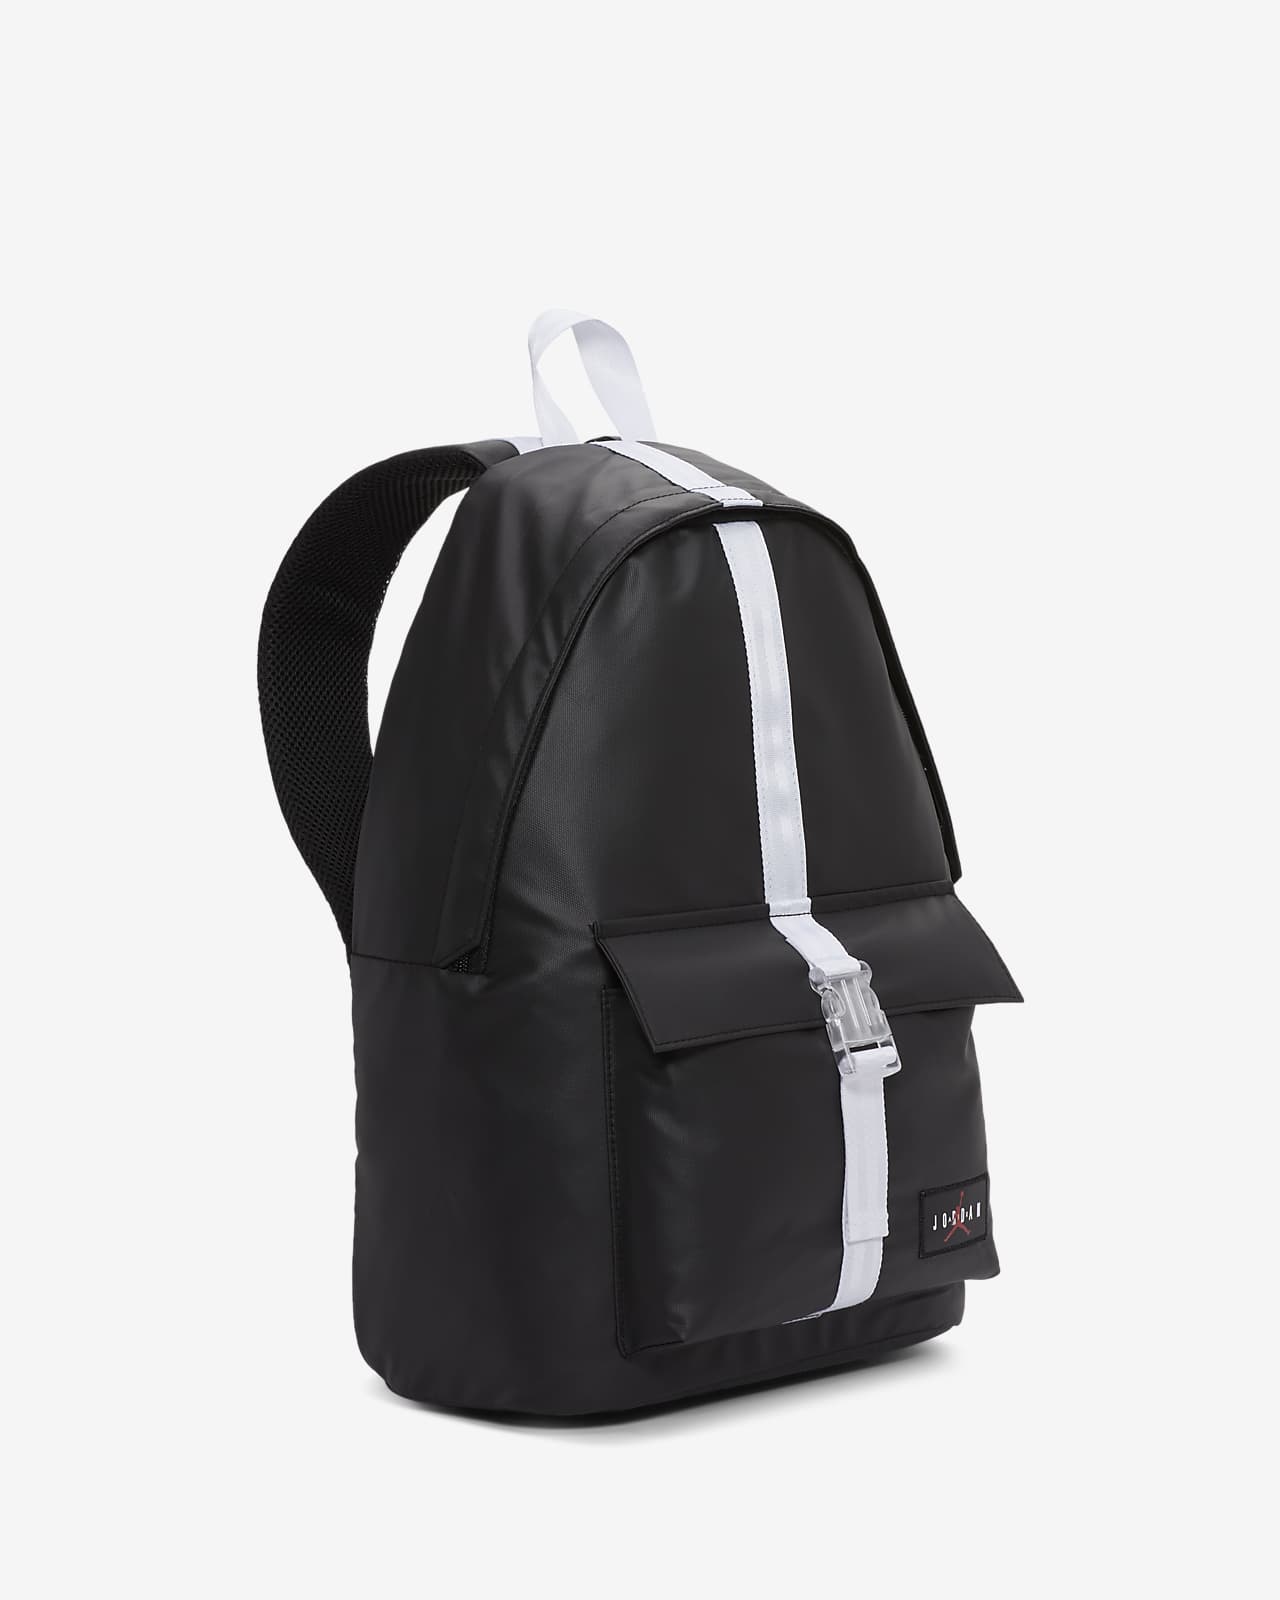 large jordan backpack